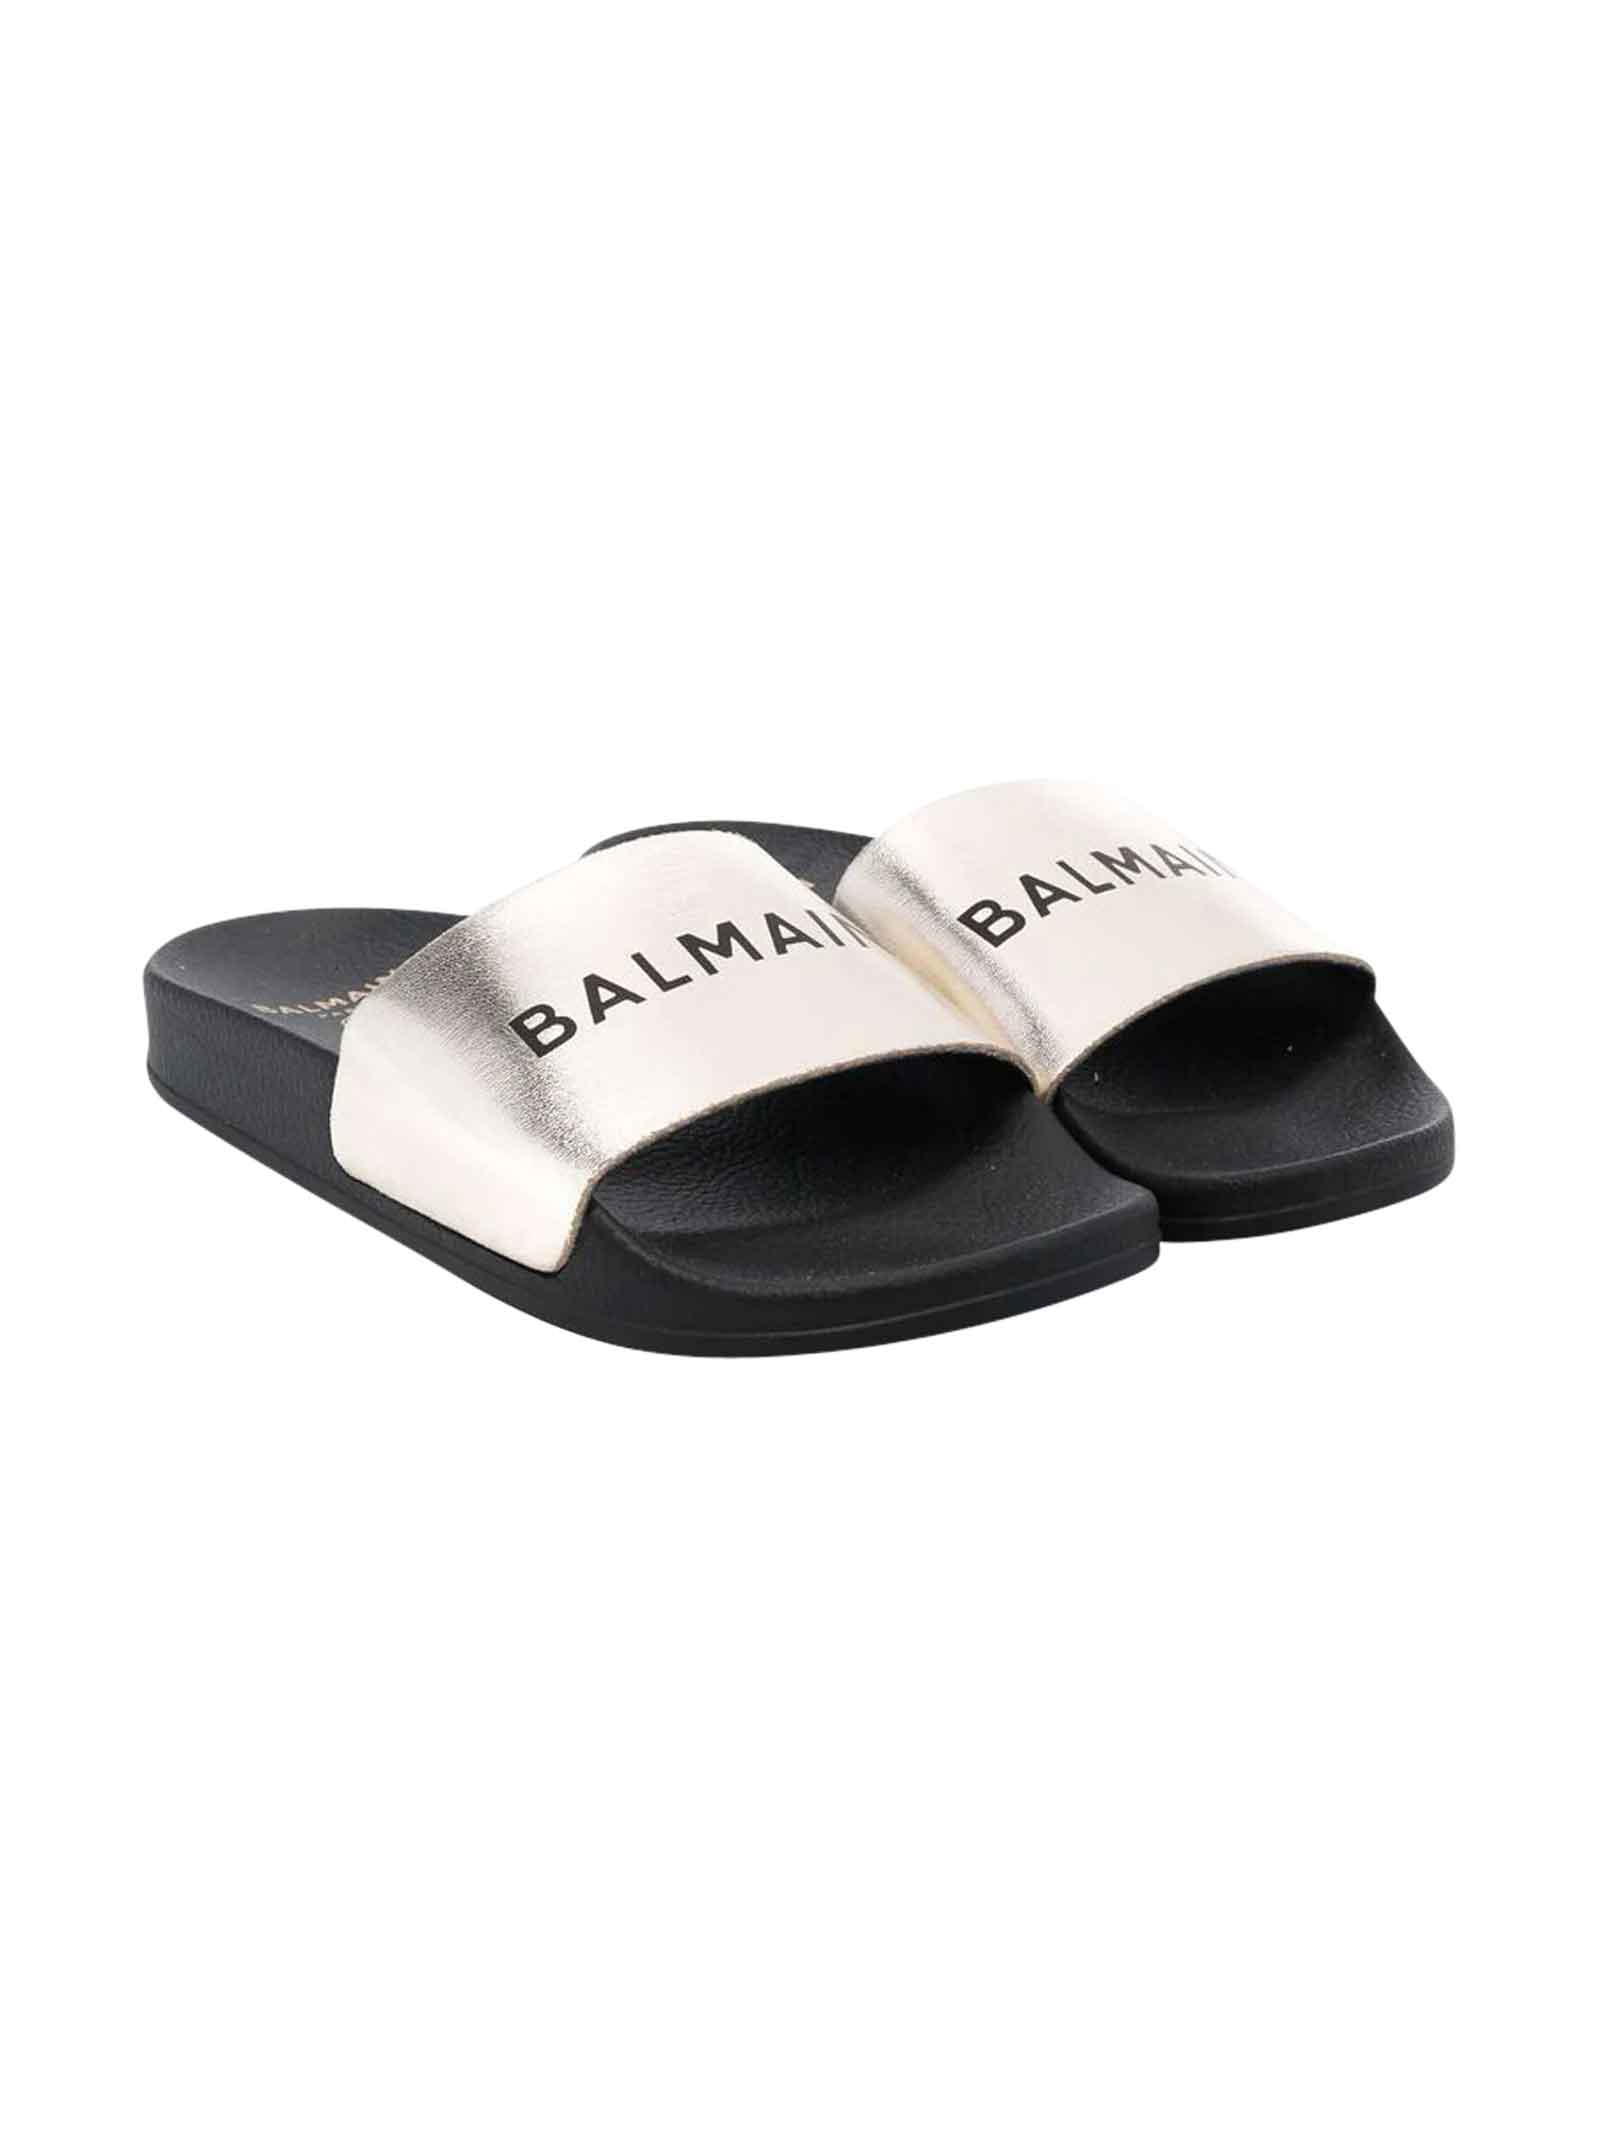 Balmain Unisex Metallic Slides Sandals